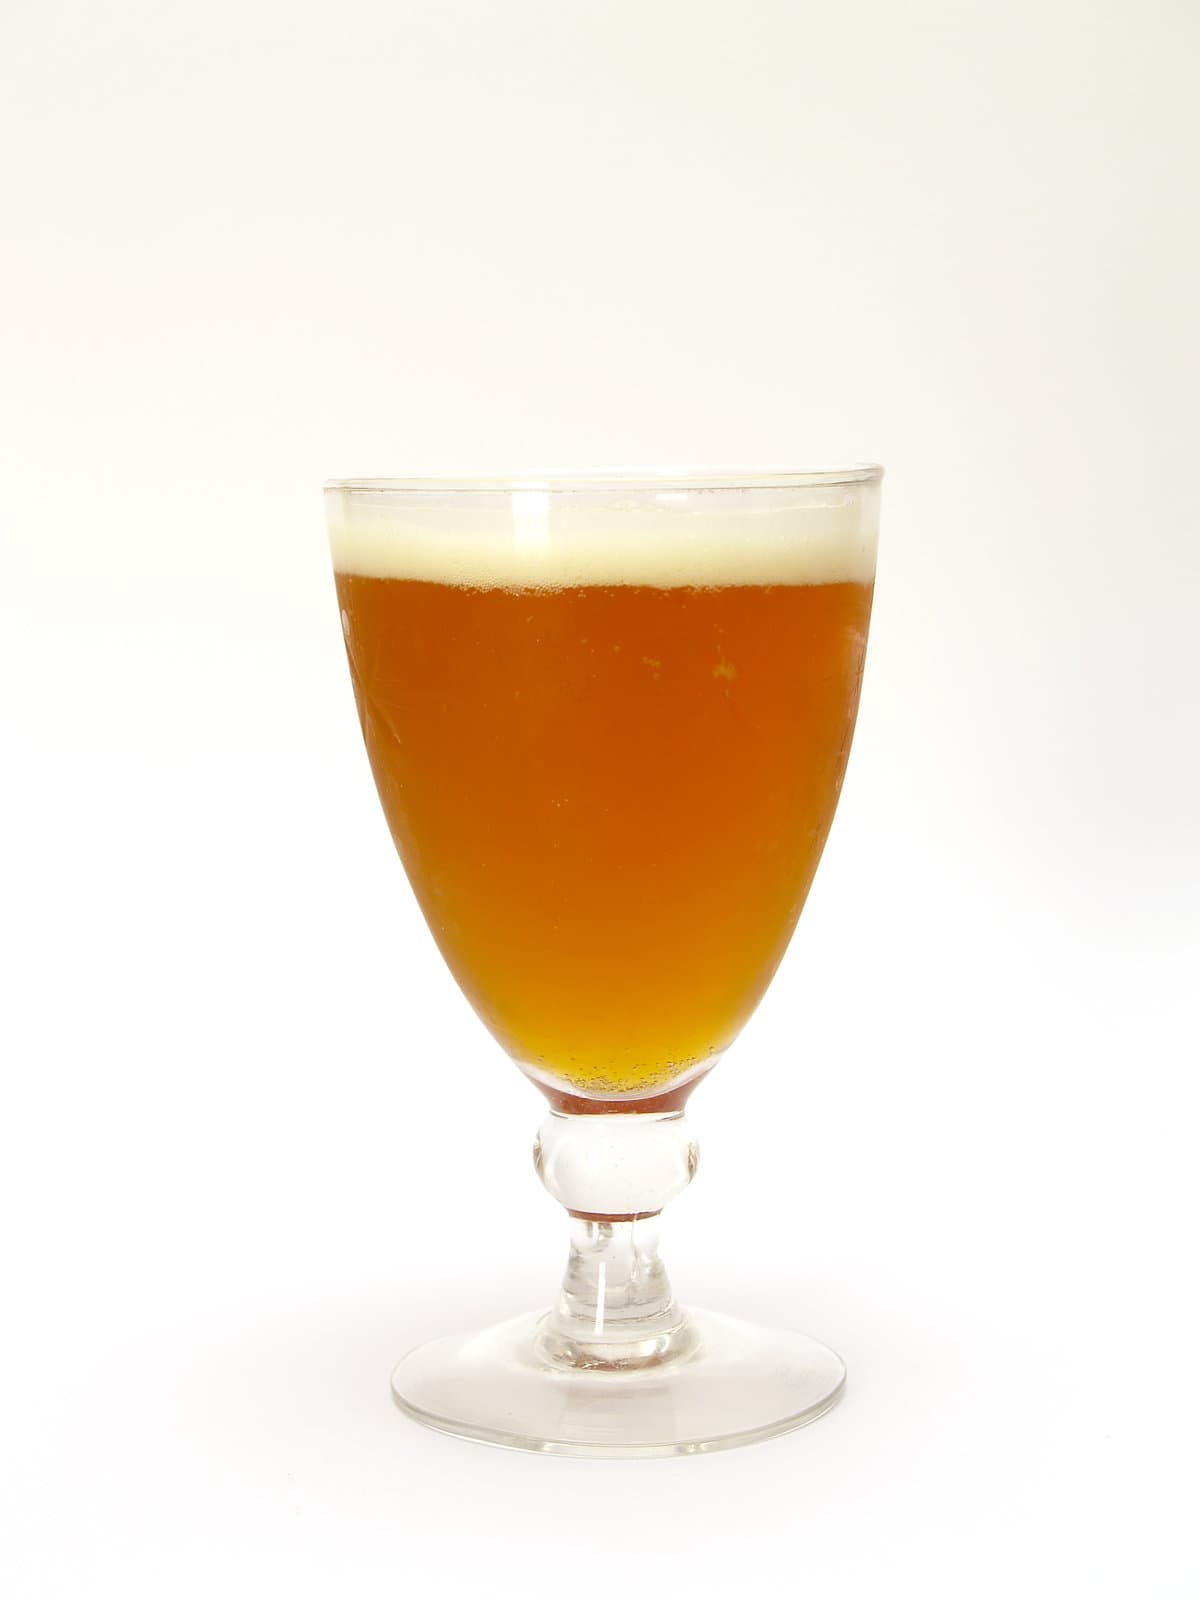 Gold Matador cocktail